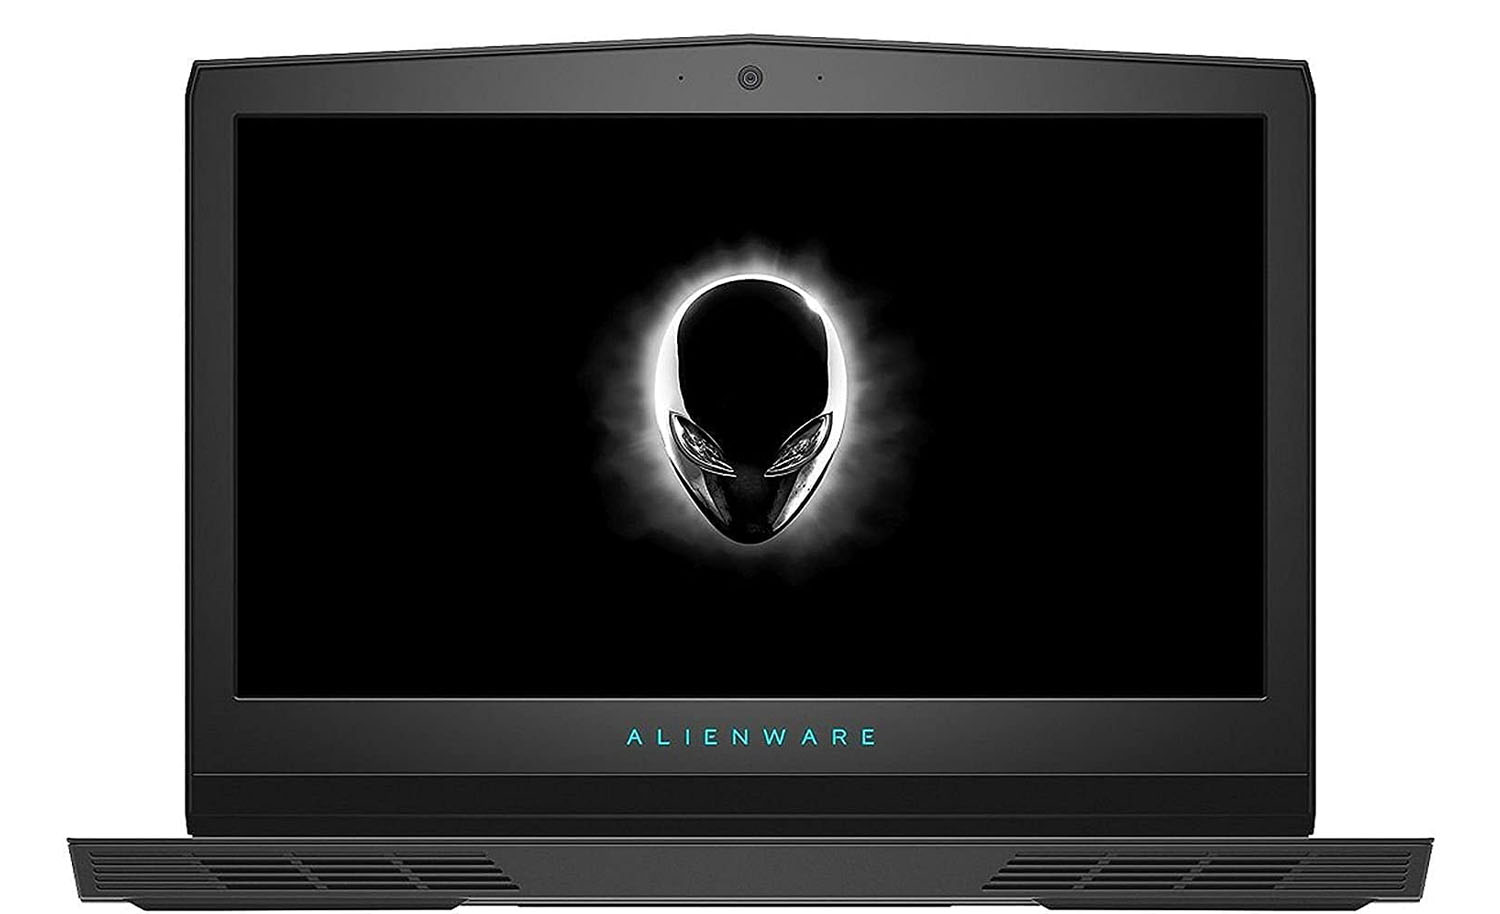 Alienware 17 R5 Intel Core i9 8th Gen 32GB RAM 256GB SSD & 1000GB HDD Windows 10 Home Nvidia GeForce GTX 1080